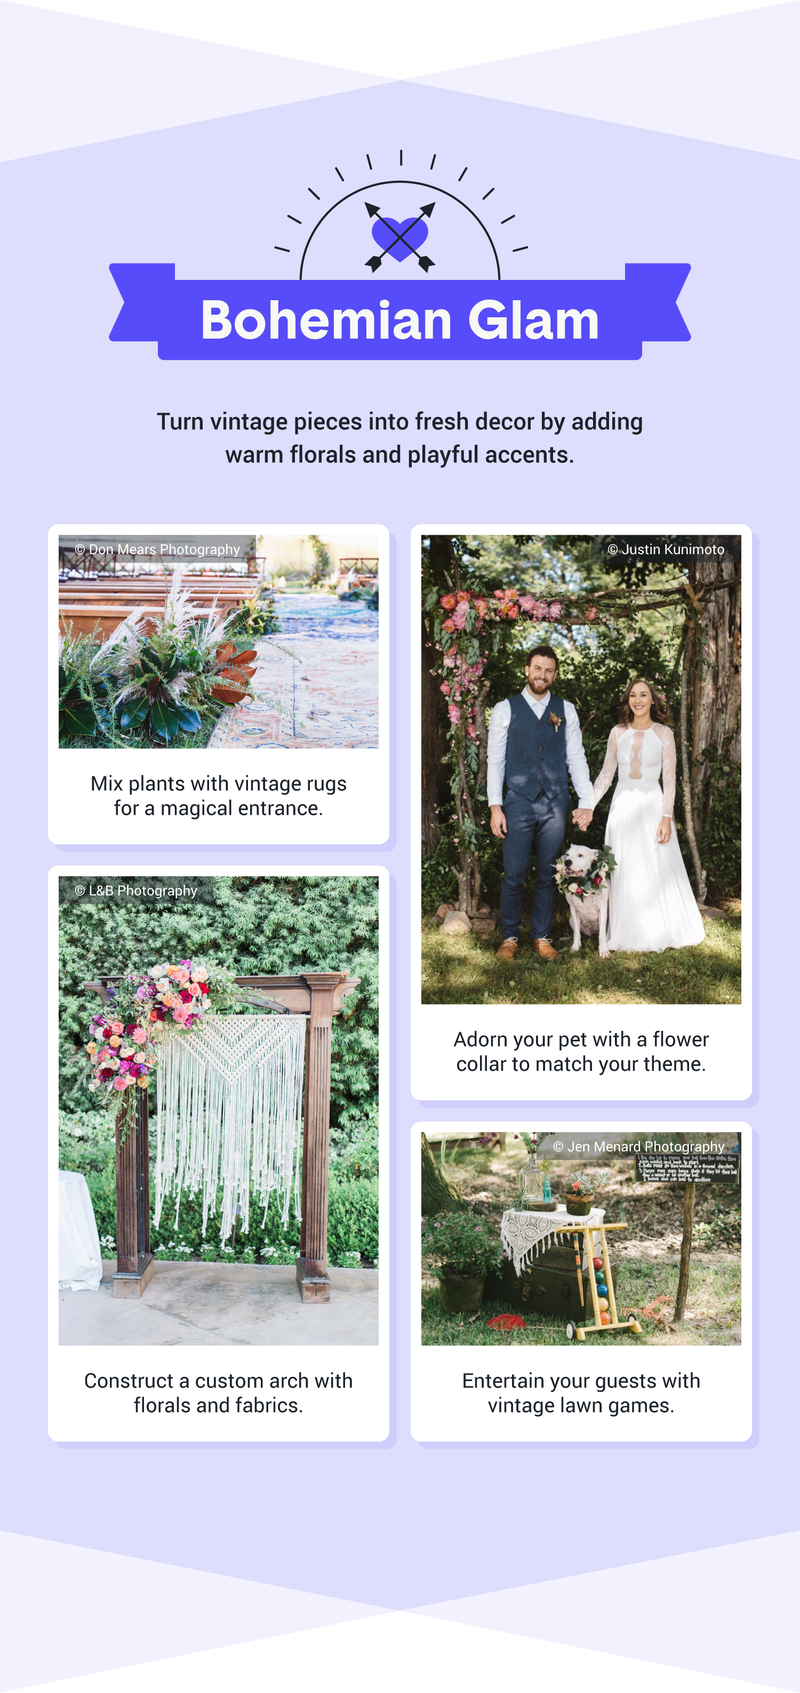 backyard-wedding-bohemian-glam-light-purple.png